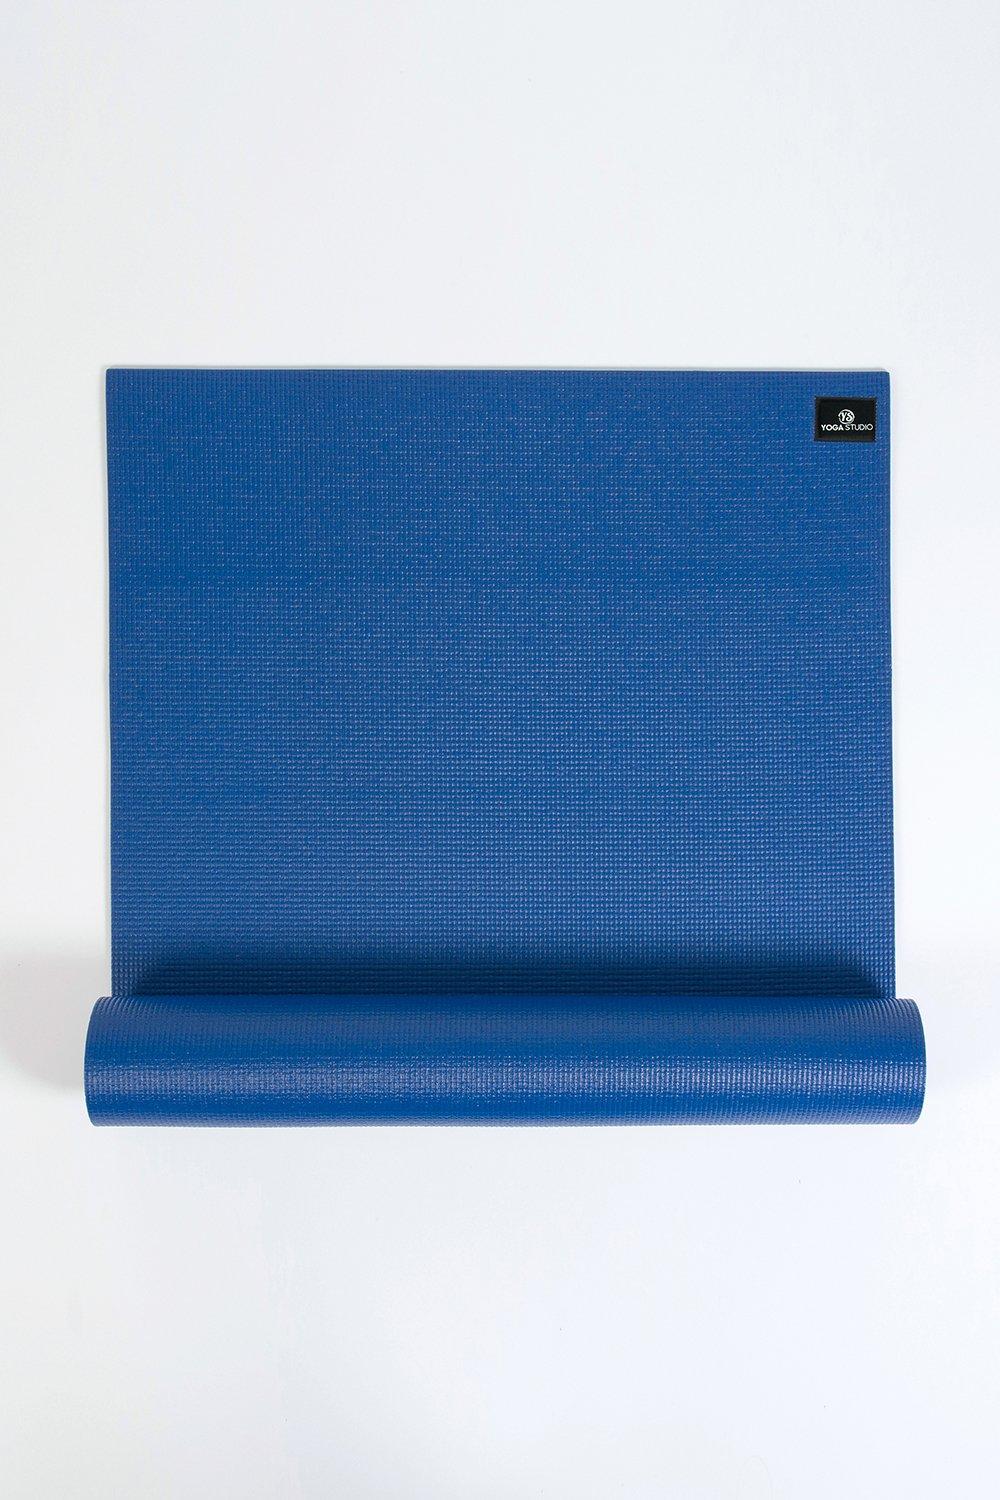 Yoga Studio Sticky Yoga Mat 6mm|blue